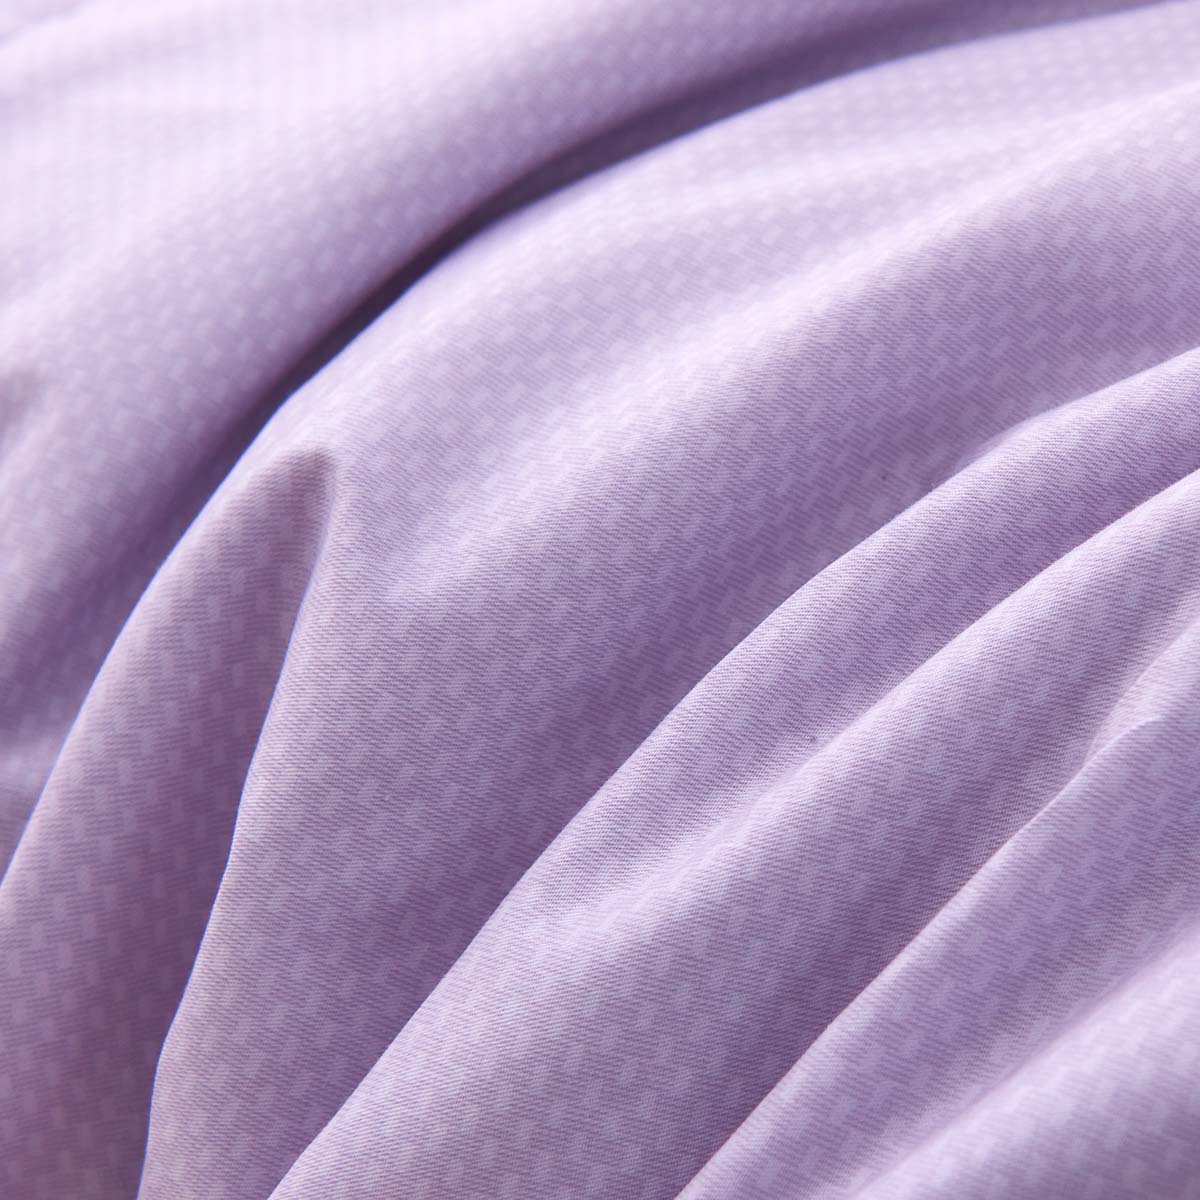 Theta Lilac Purple Pattern Cotton Light Comforter